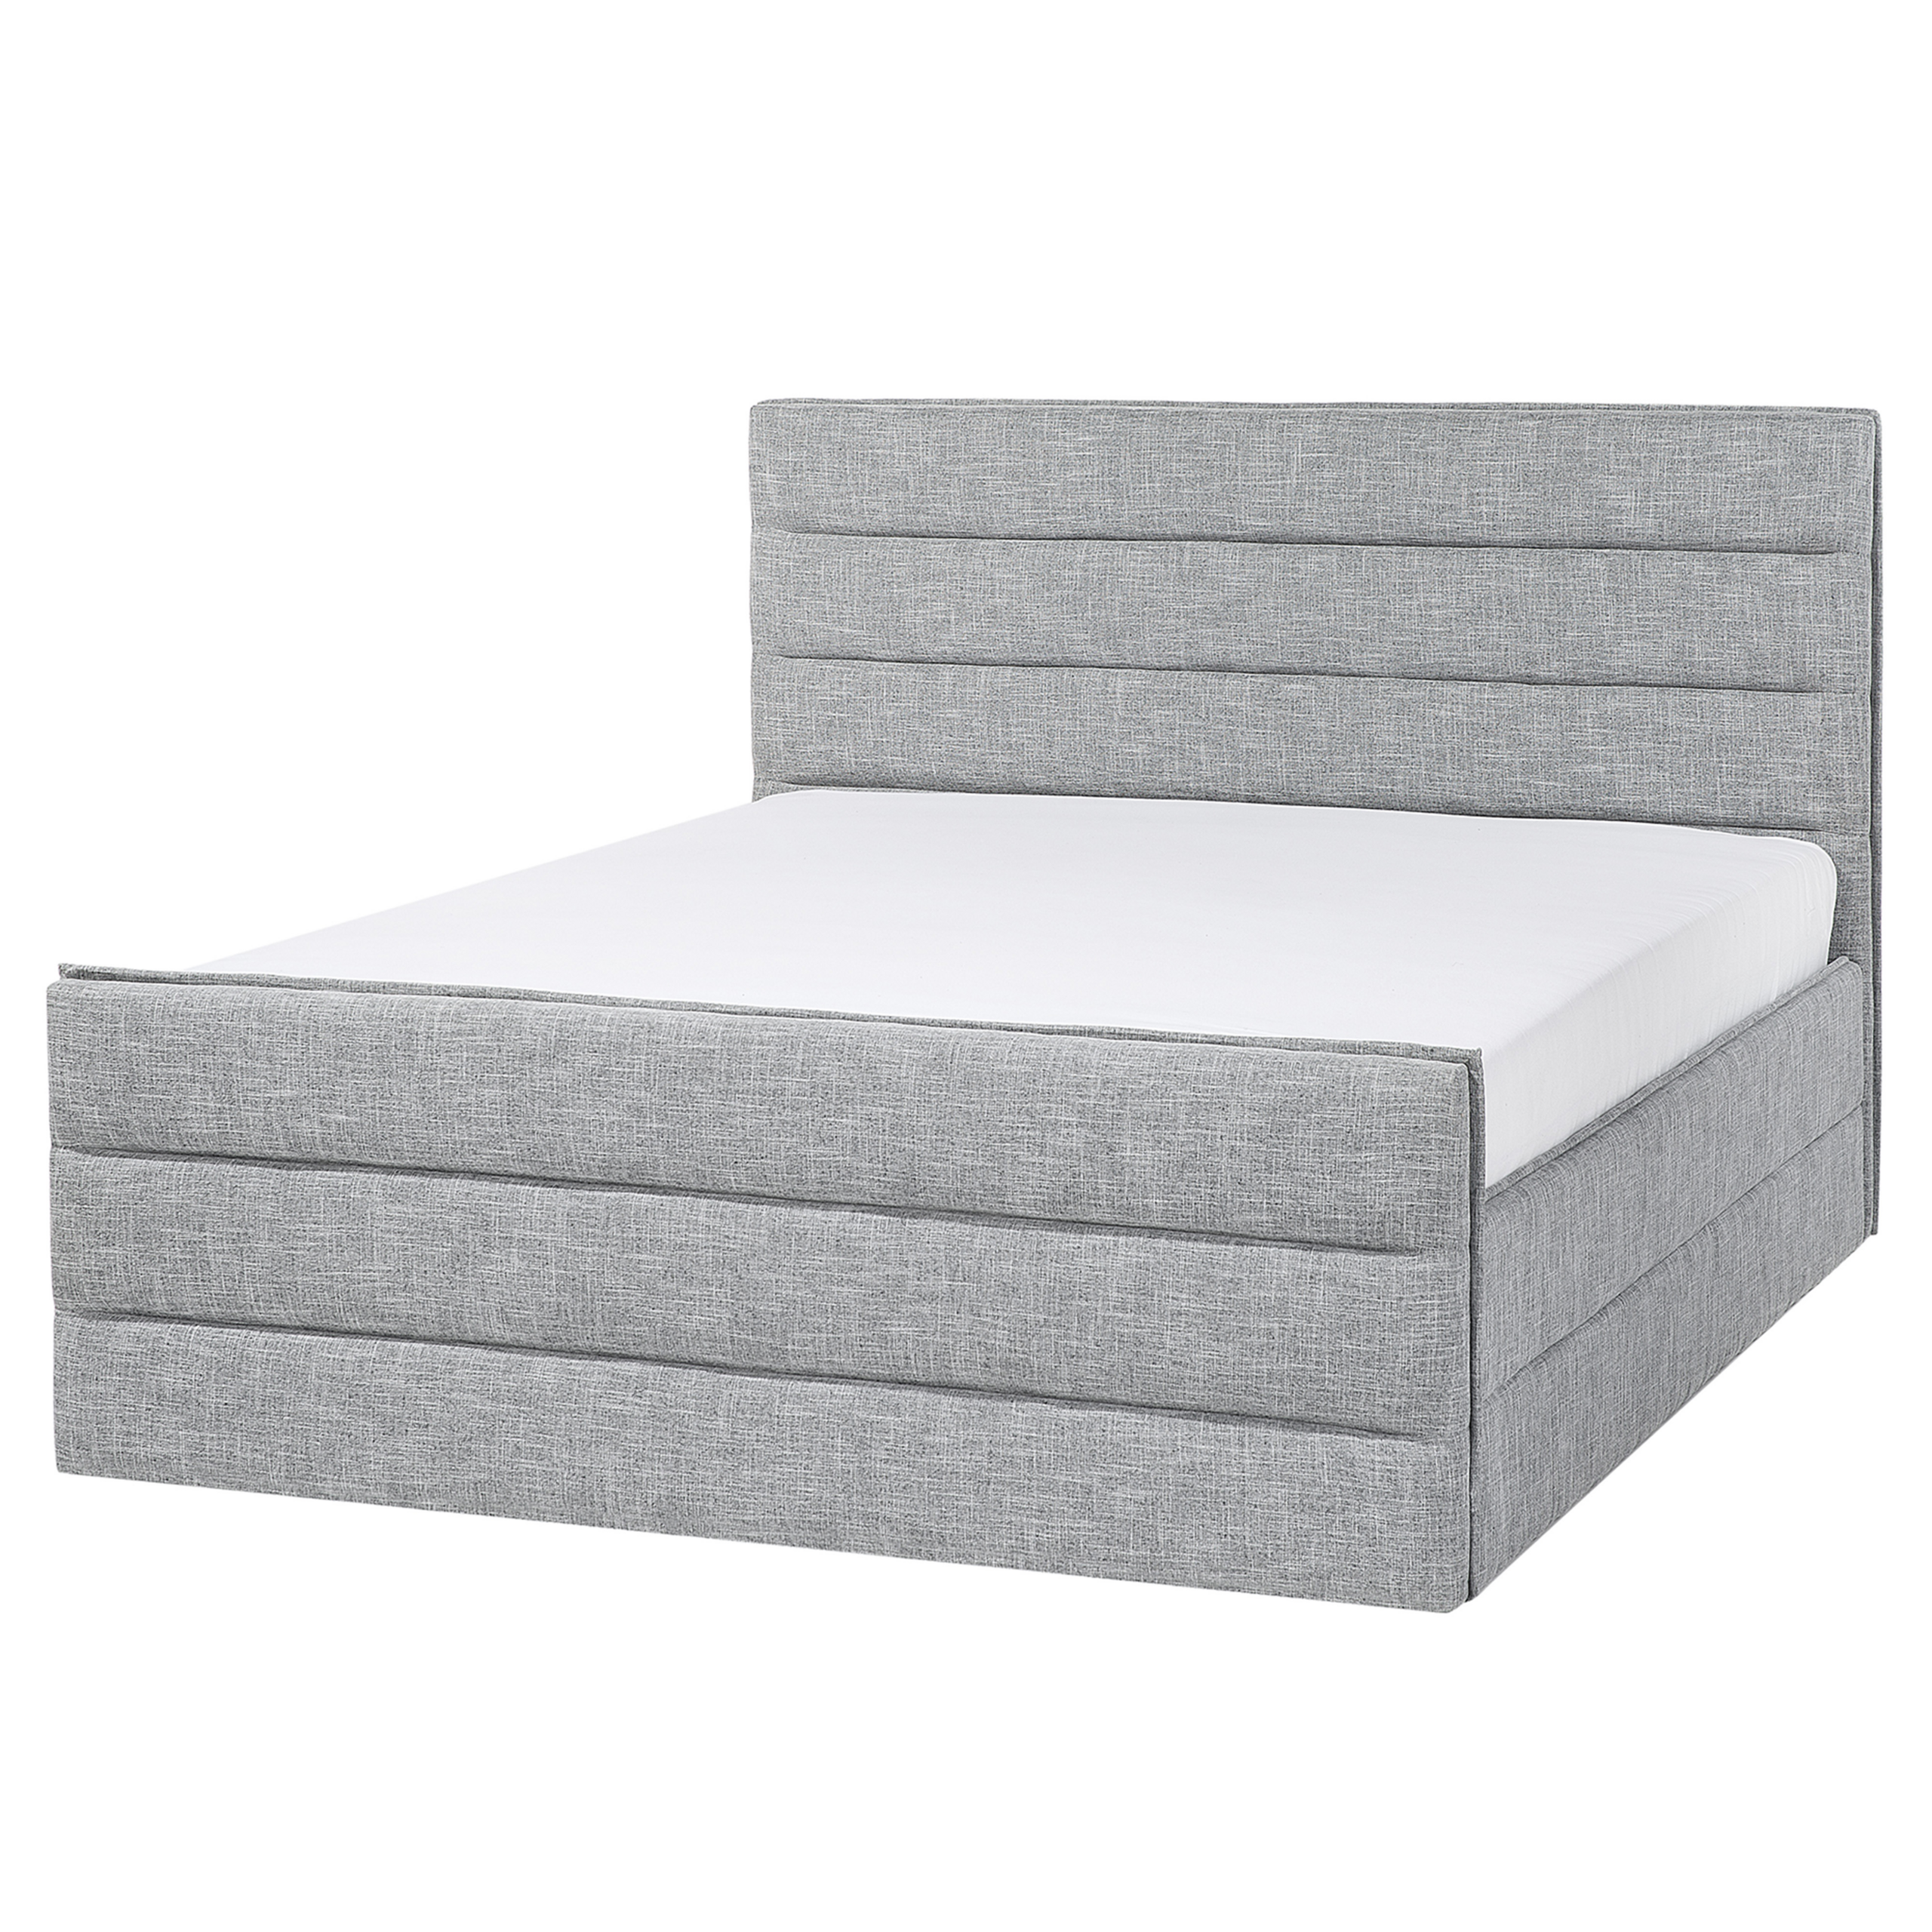 Beliani Bed Light Grey Linen Fabric EU King Size 5ft3 Slatted Base Padded Headboard and Footboard